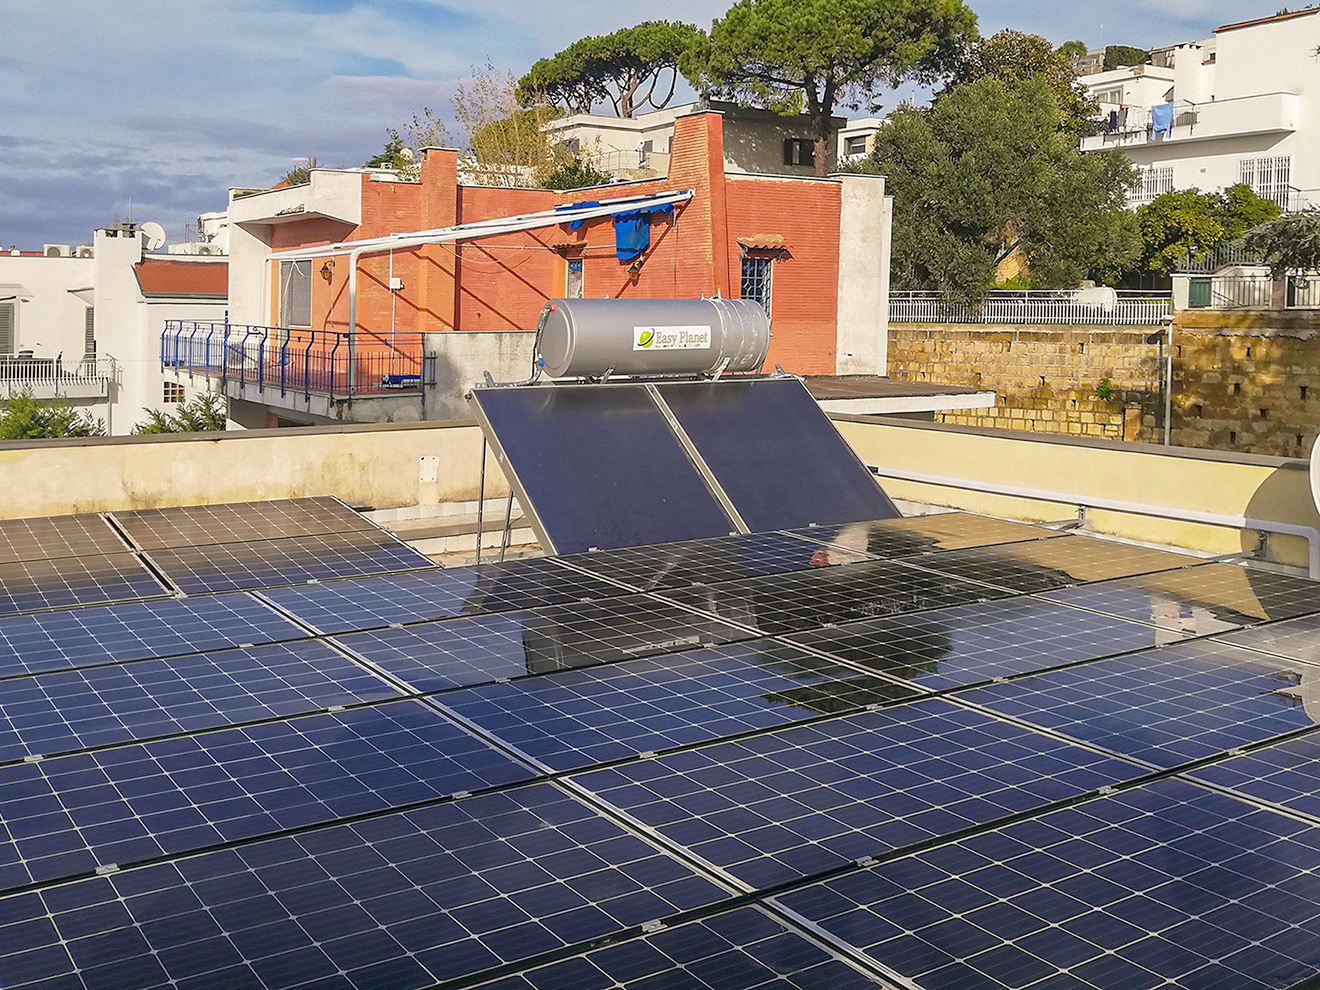 Impianto Fotovoltaico 8 kWp con Solare Termico Pozzuoli, Napoli dmt solar impianti fotovoltaici partner tesla, maxeon sunpower, solaredge